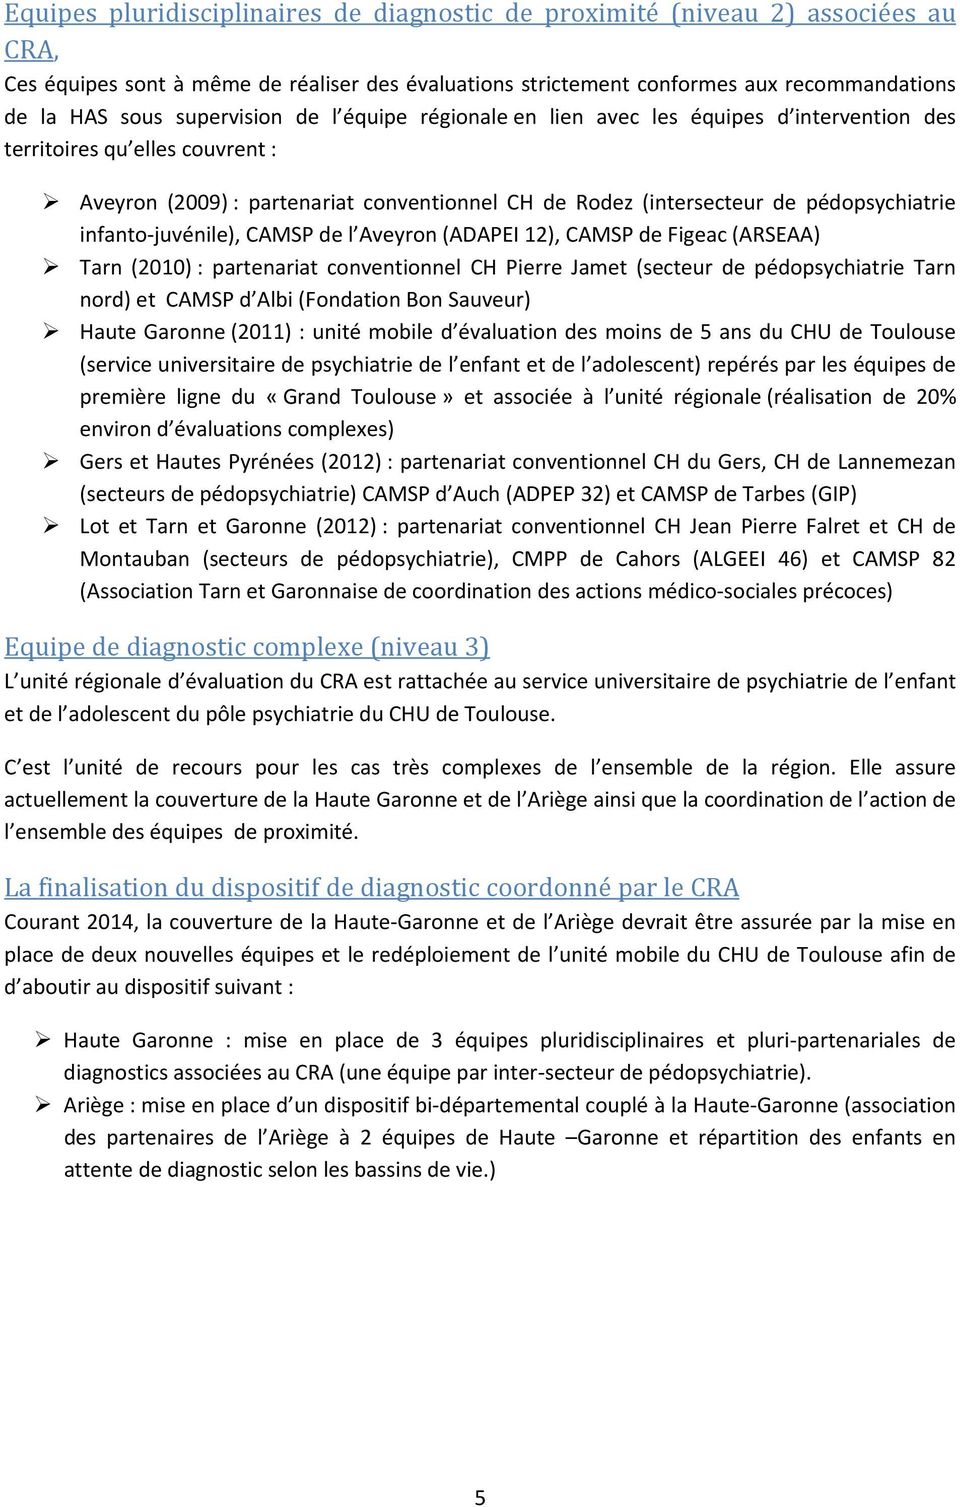 infanto juvénile), CAMSP de l Aveyron (ADAPEI 12), CAMSP de Figeac (ARSEAA) Tarn (2010) : partenariat conventionnel CH Pierre Jamet (secteur de pédopsychiatrie Tarn nord) et CAMSP d Albi (Fondation